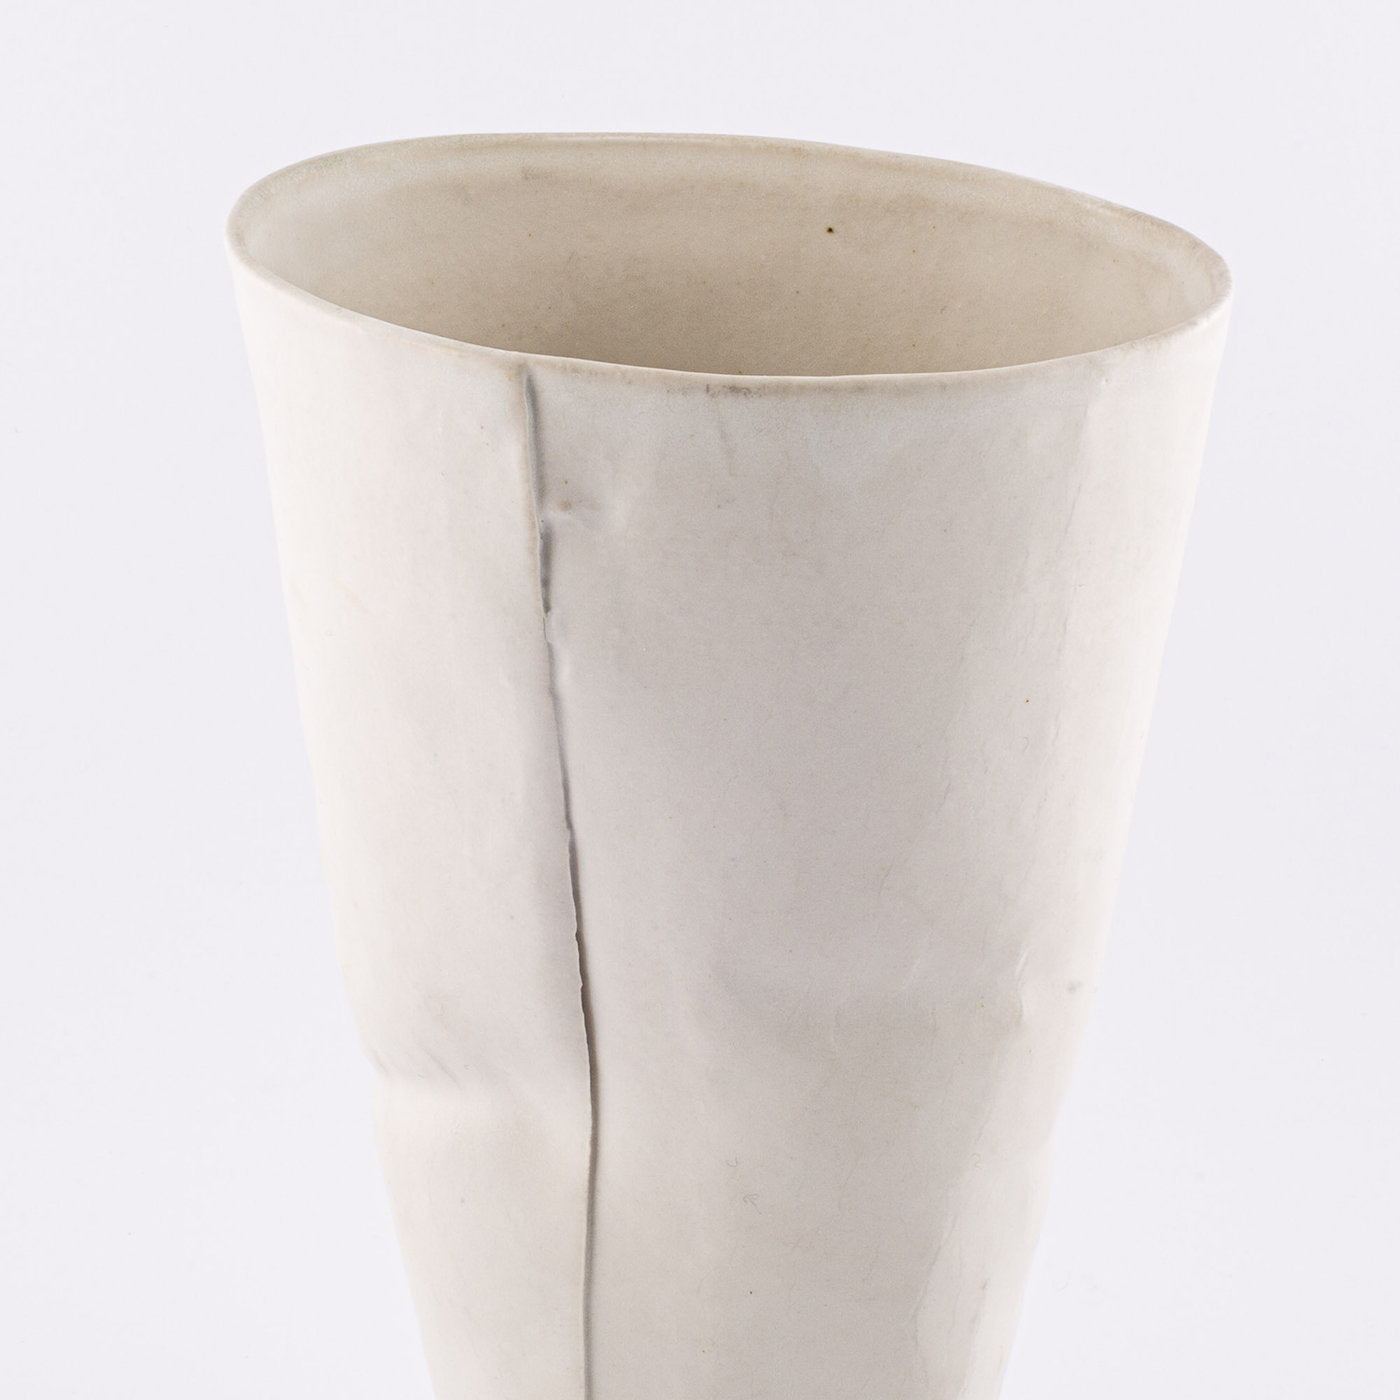 White Vase #1 - Alternative view 1